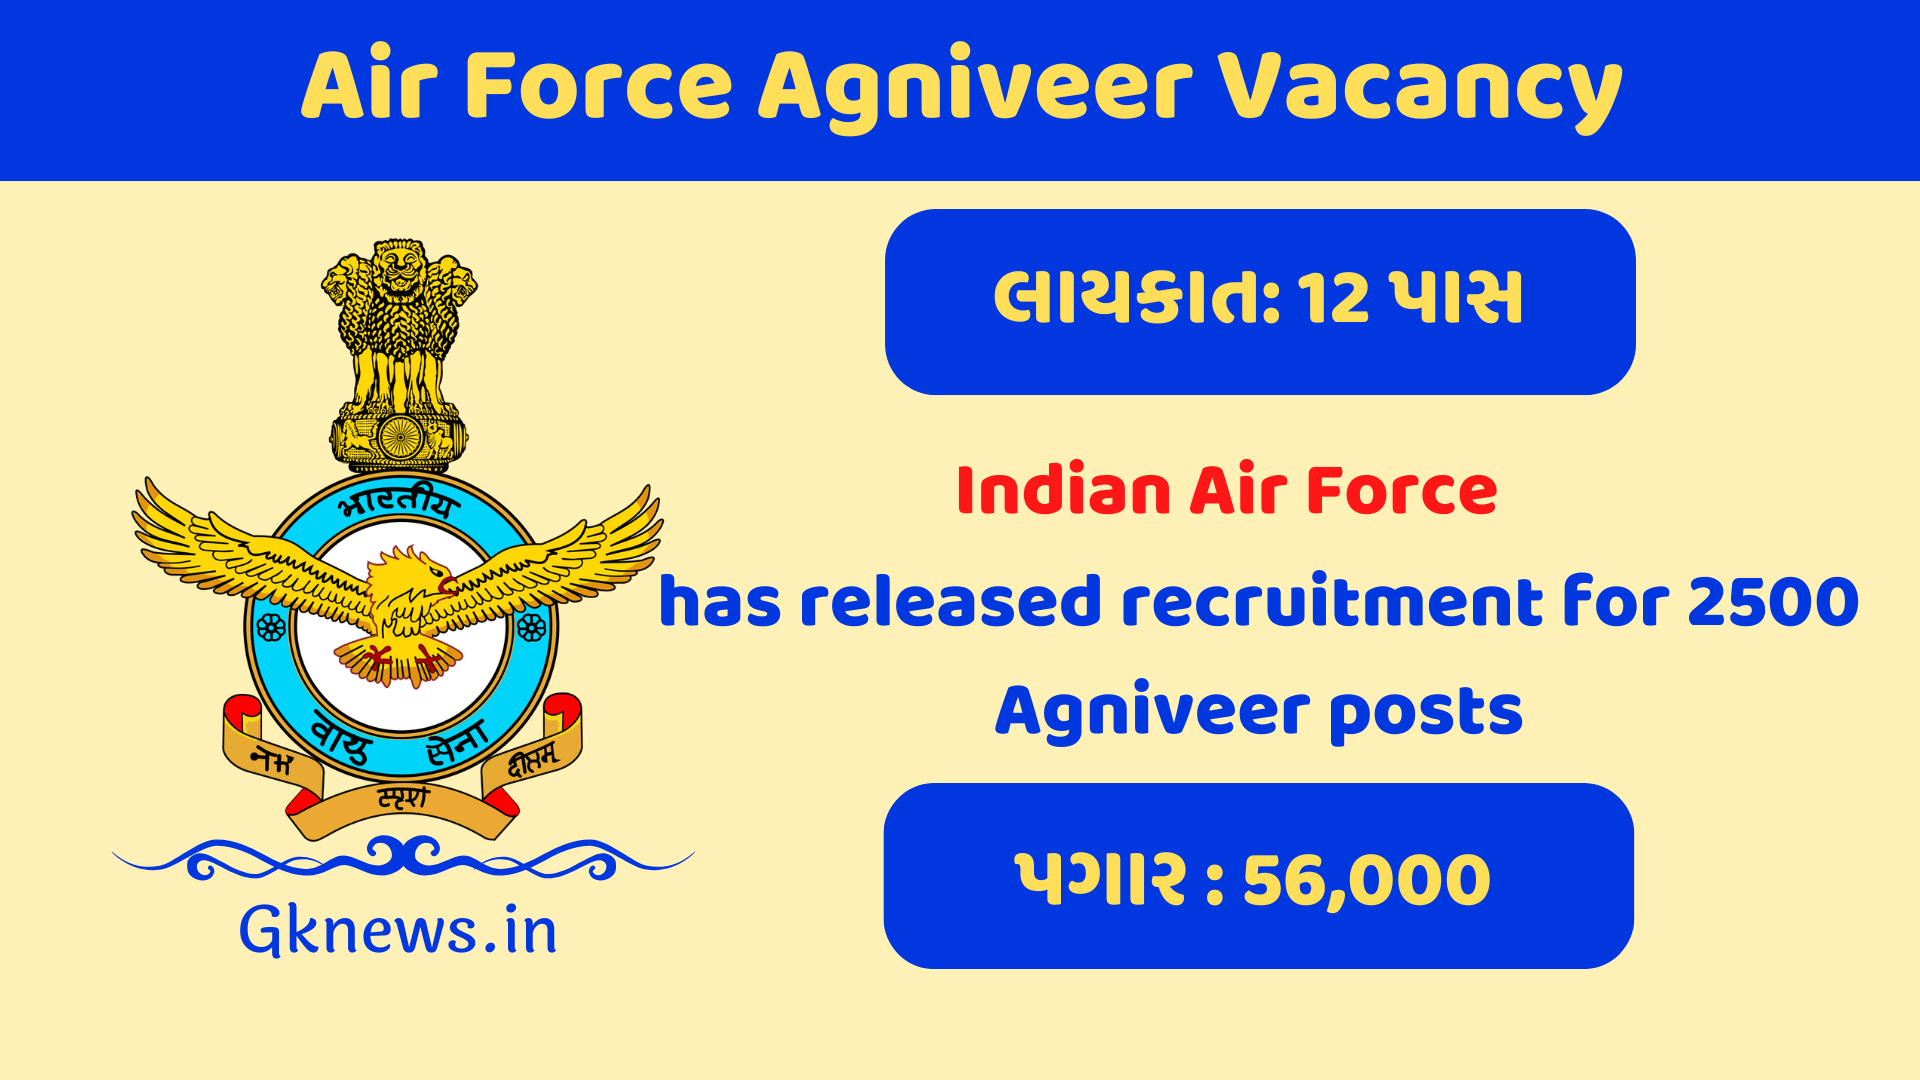 Air Force Agniveer Vacancy